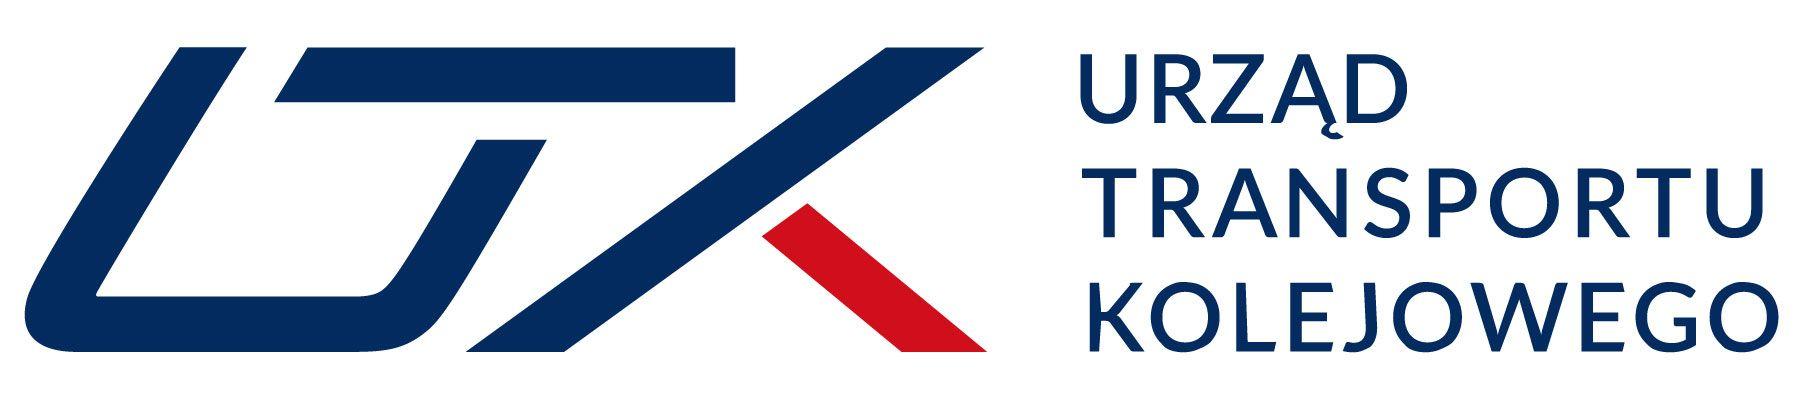 Utk Logo - File:Logo UTK nowe.jpg - Wikimedia Commons